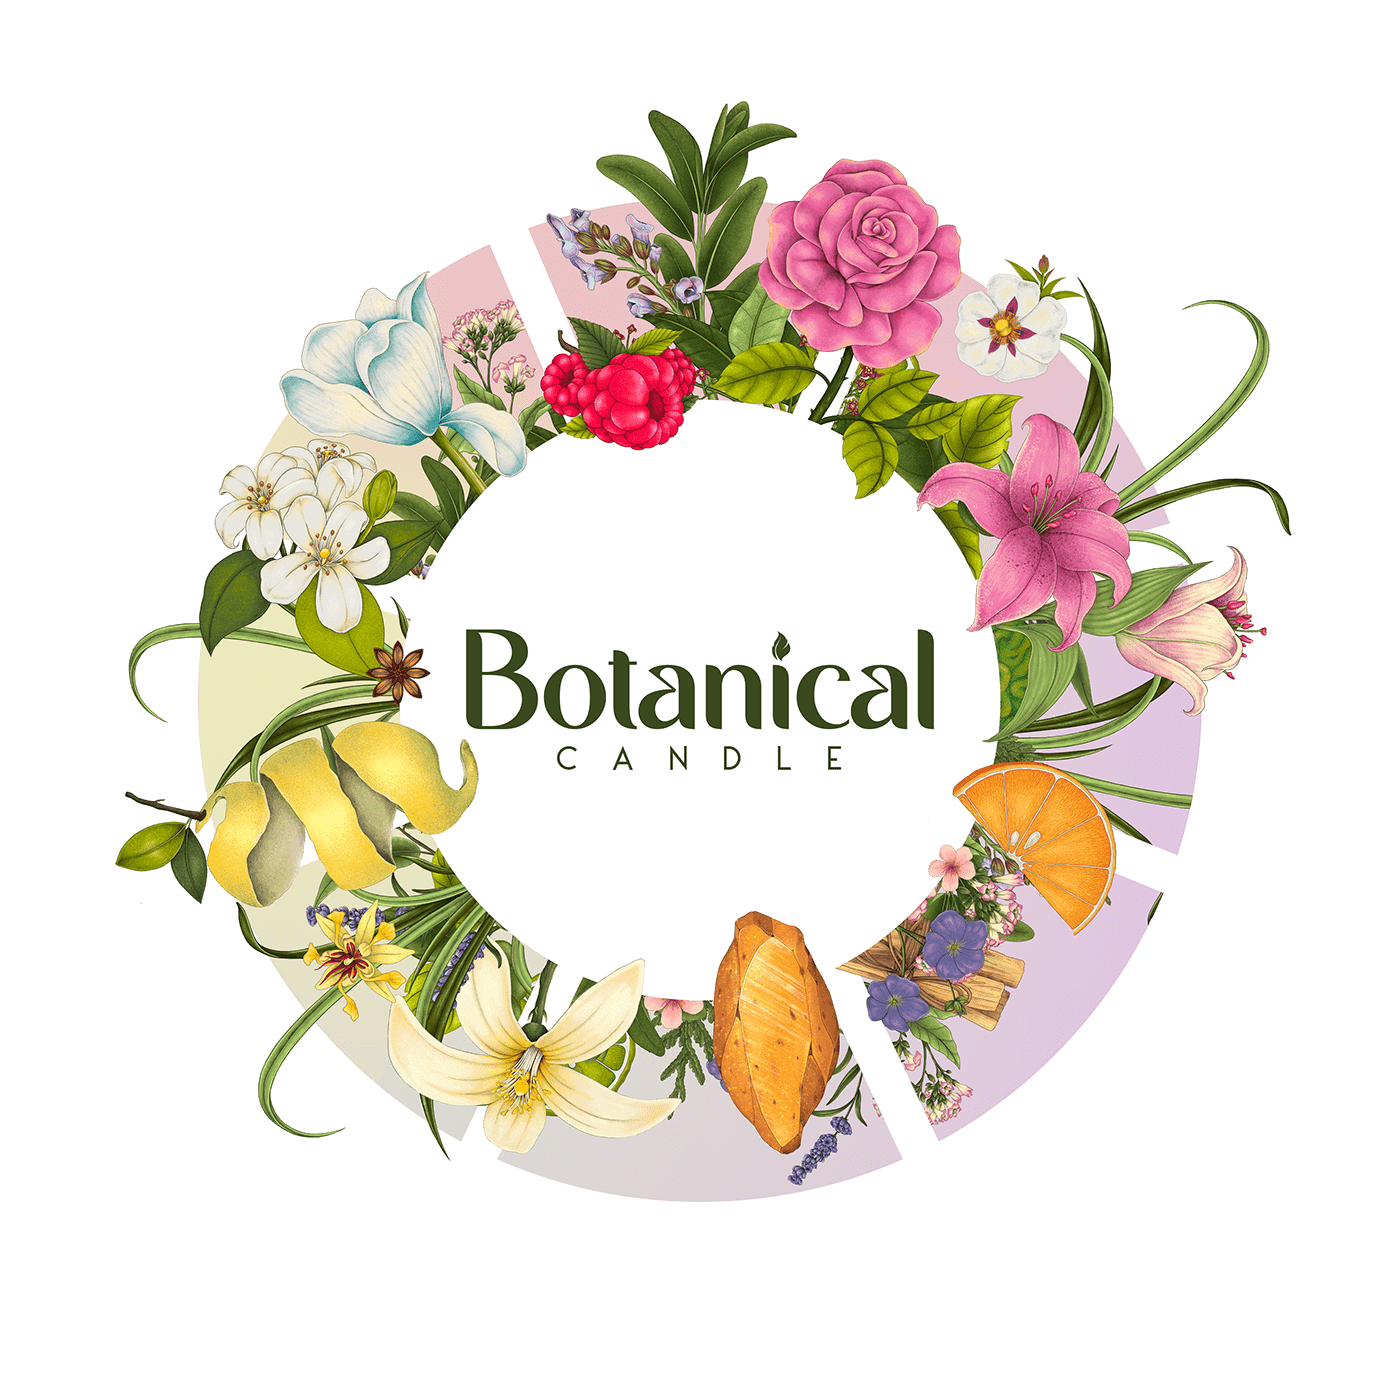 botanical illustration brand identity illustrated packaging ILLUSTRATION  packaging design rebranding